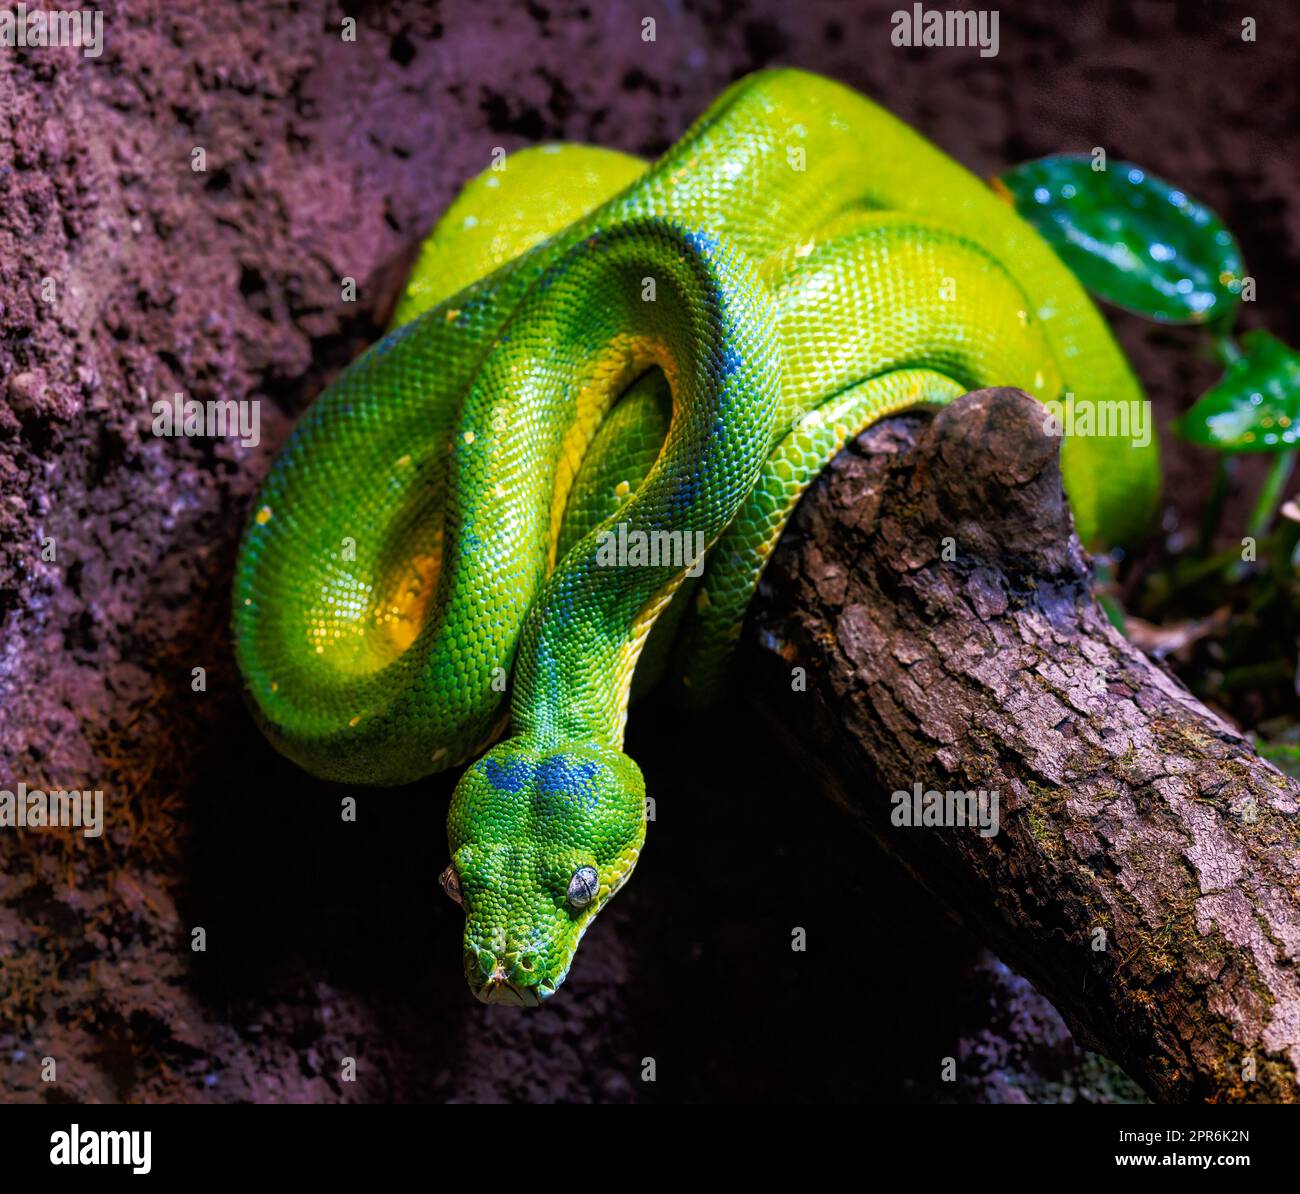 Green tree python snake Stock Photo